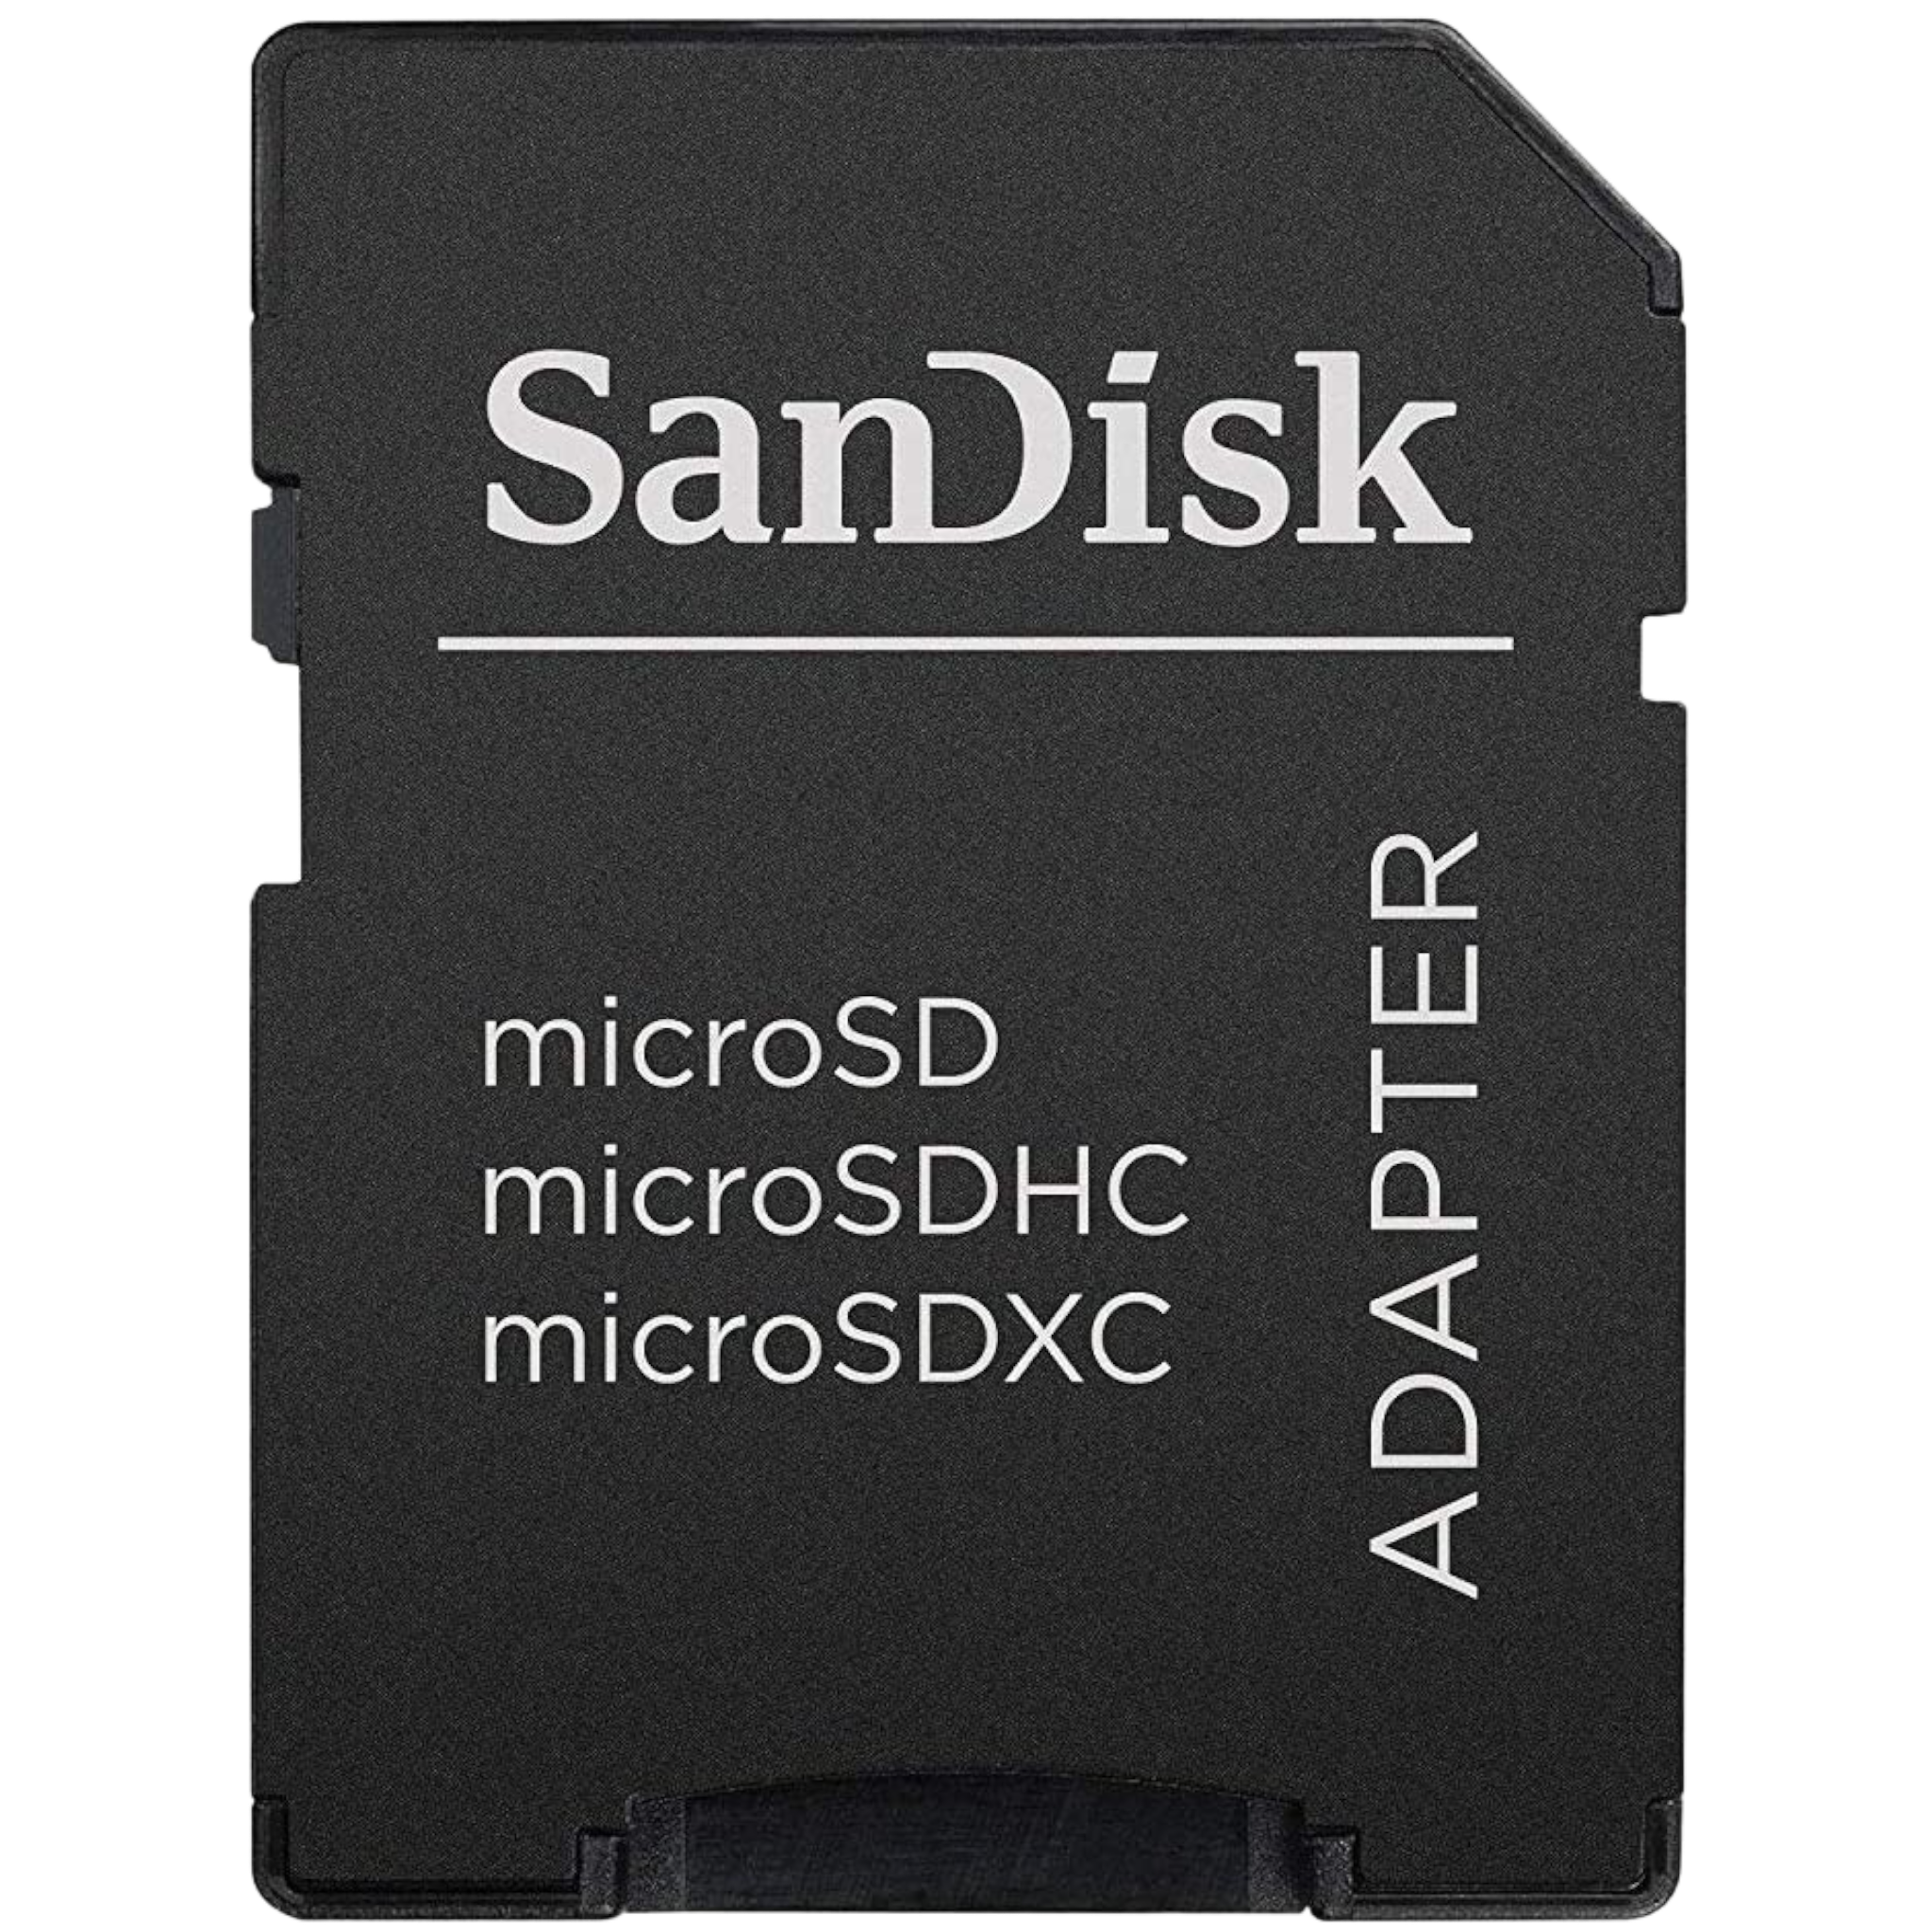 MicroSD Card & Adapter 8GB | Accessories 